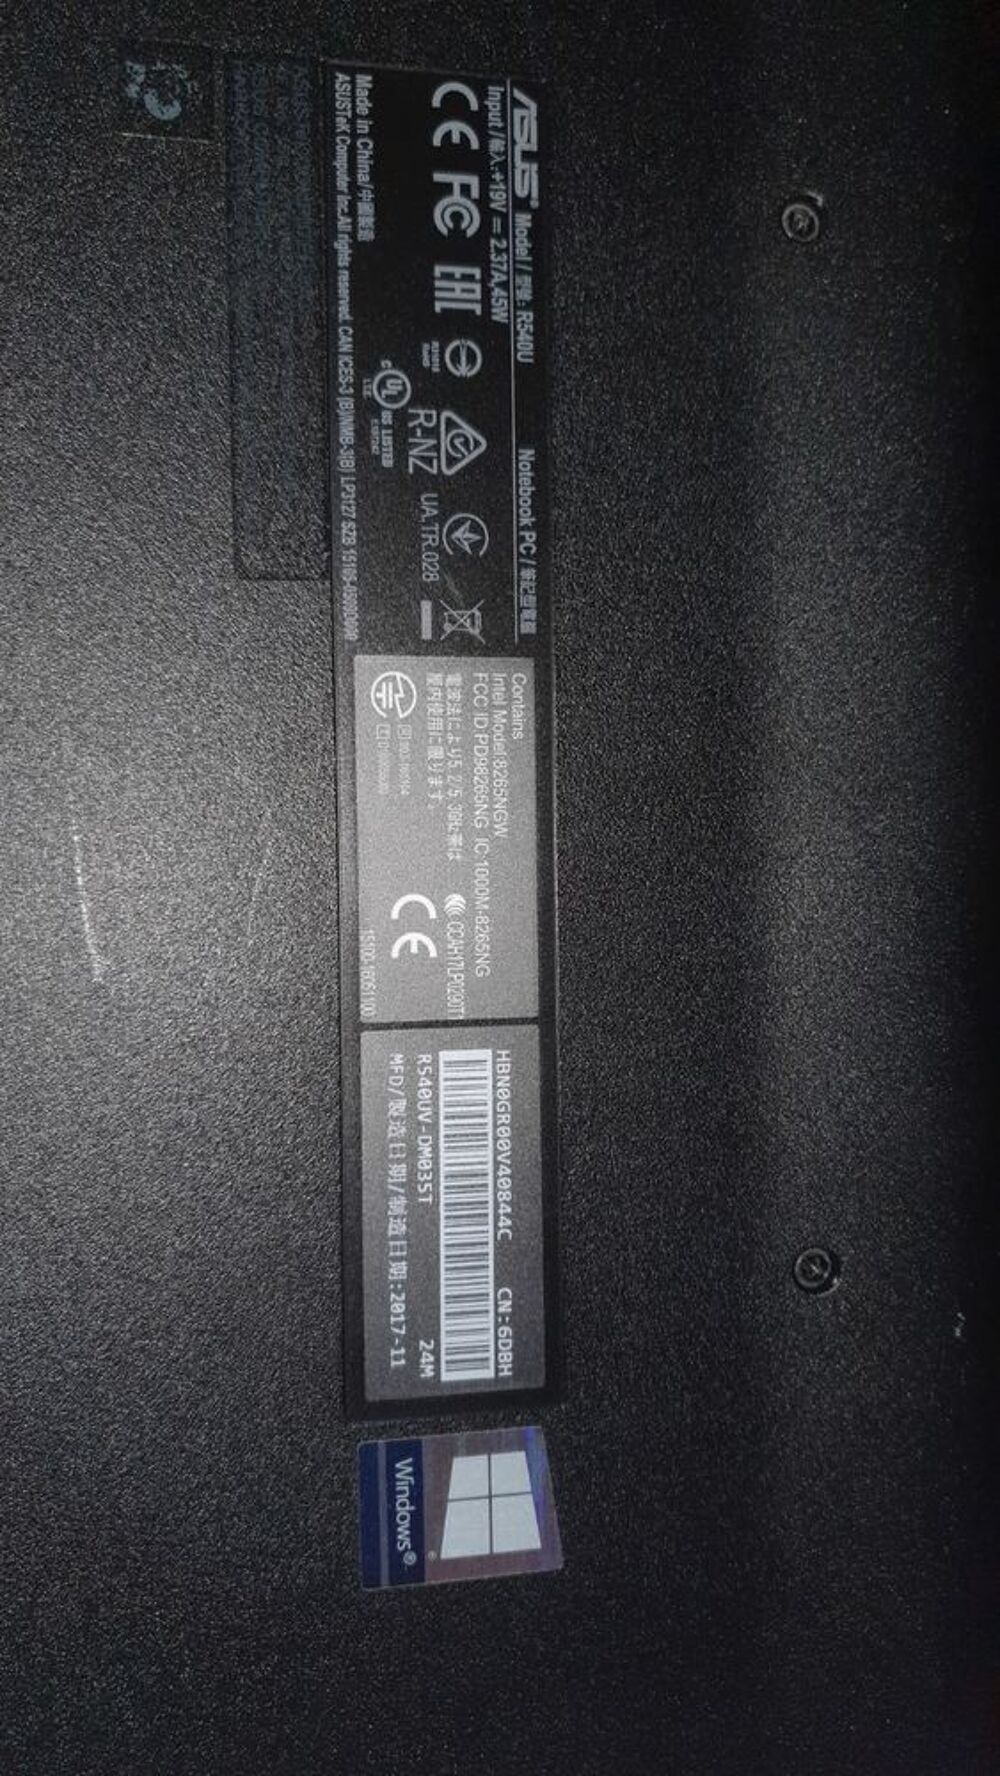 Pc portable Asus ssd 128gb + 1to Matriel informatique